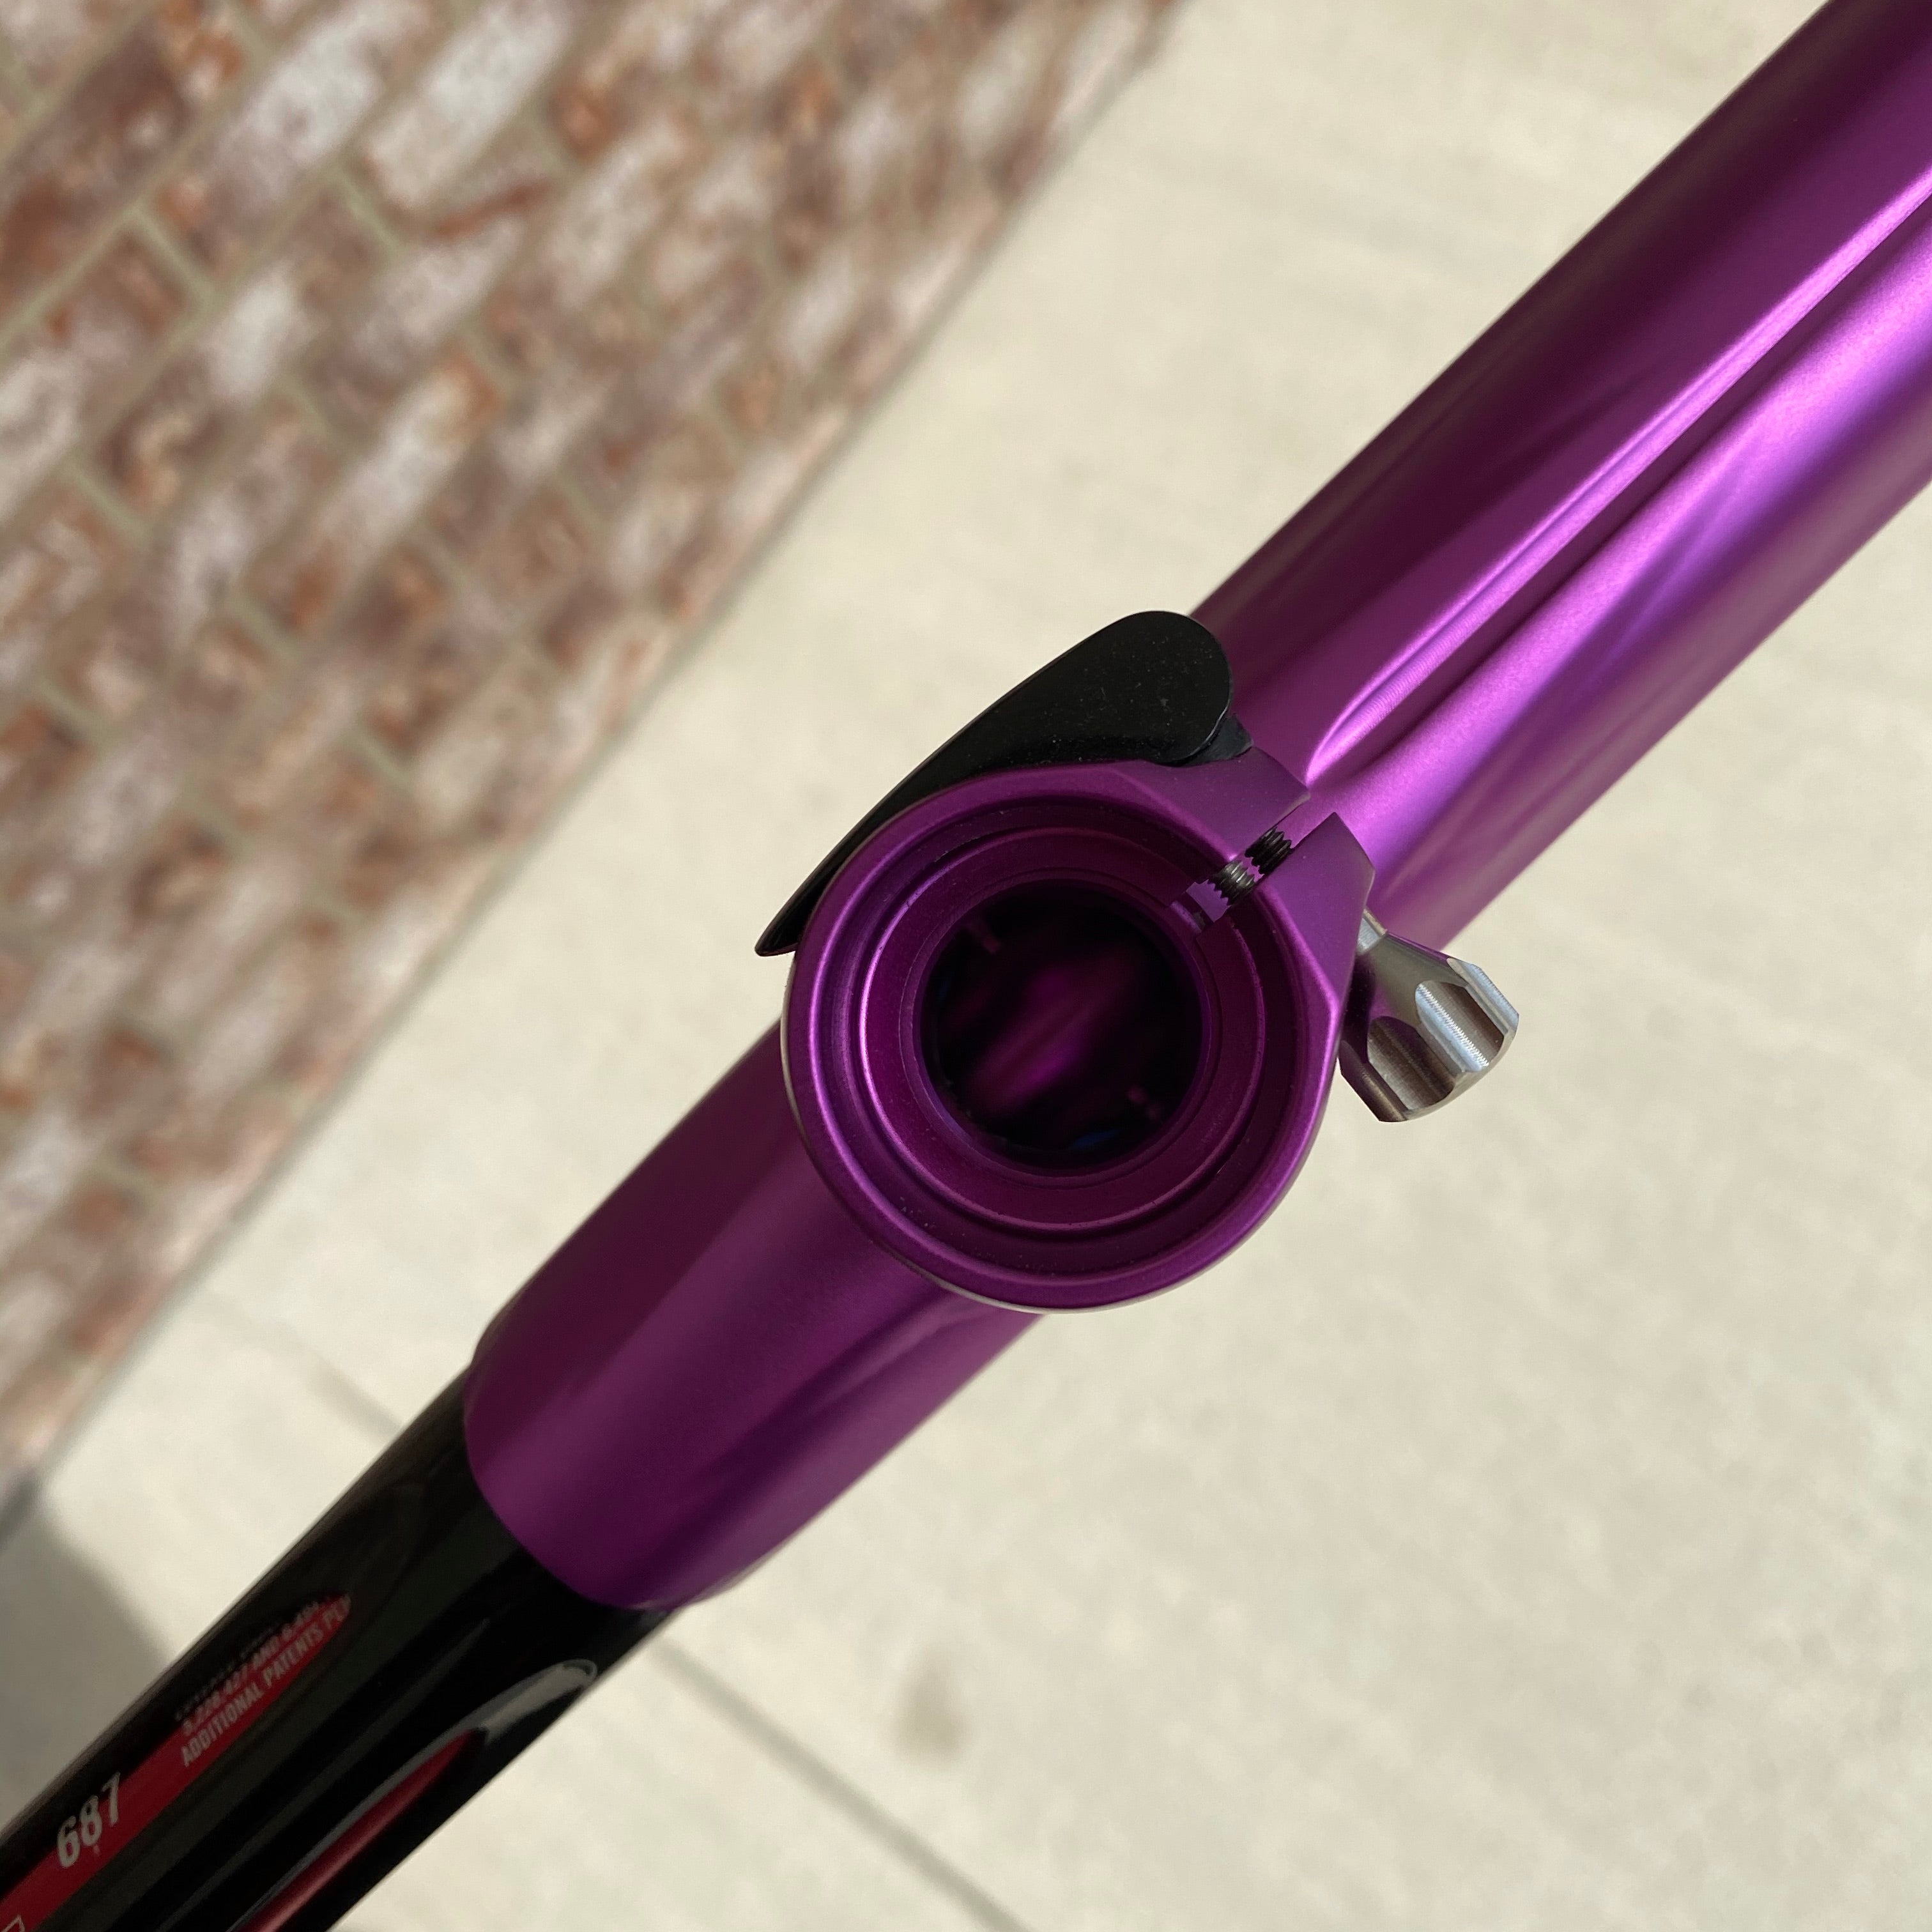 Used Shocker XLS Paintball Gun - Pink